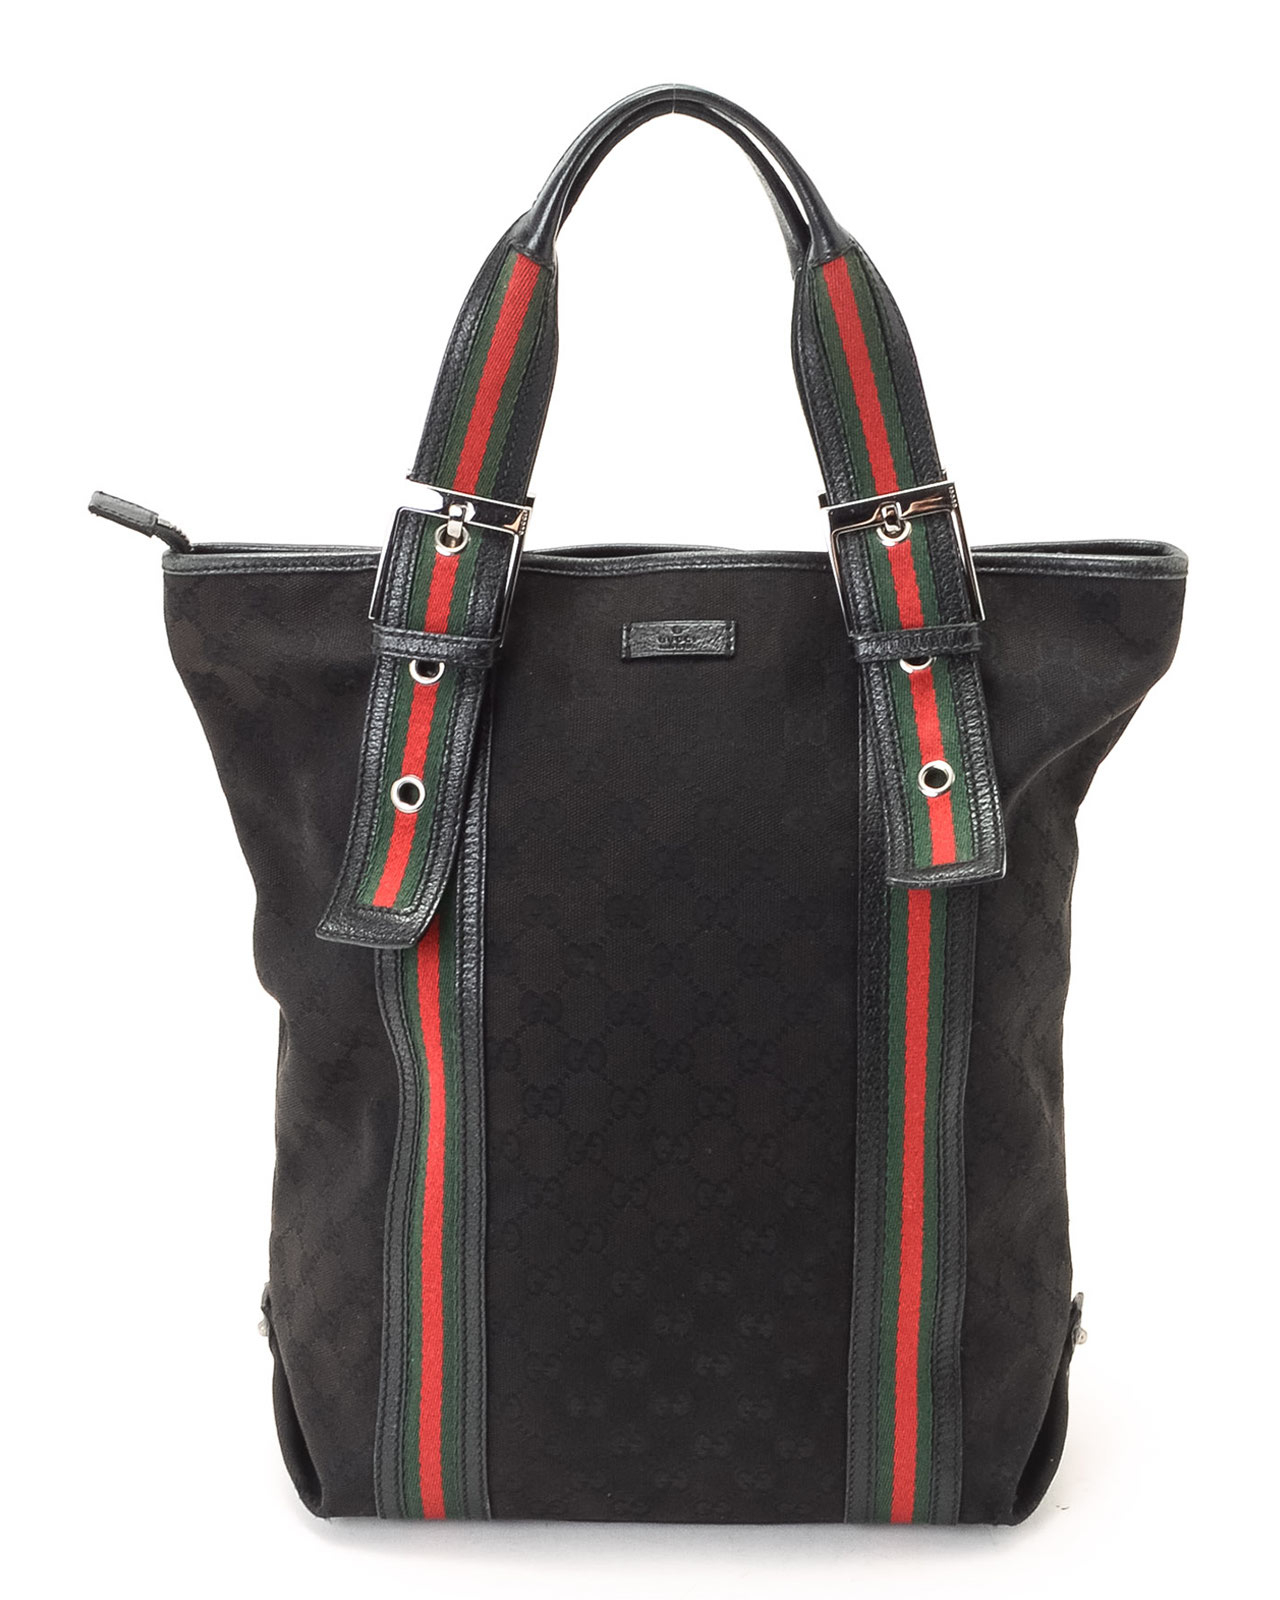 Lyst - Gucci Black Canvas Tote Bag in Black